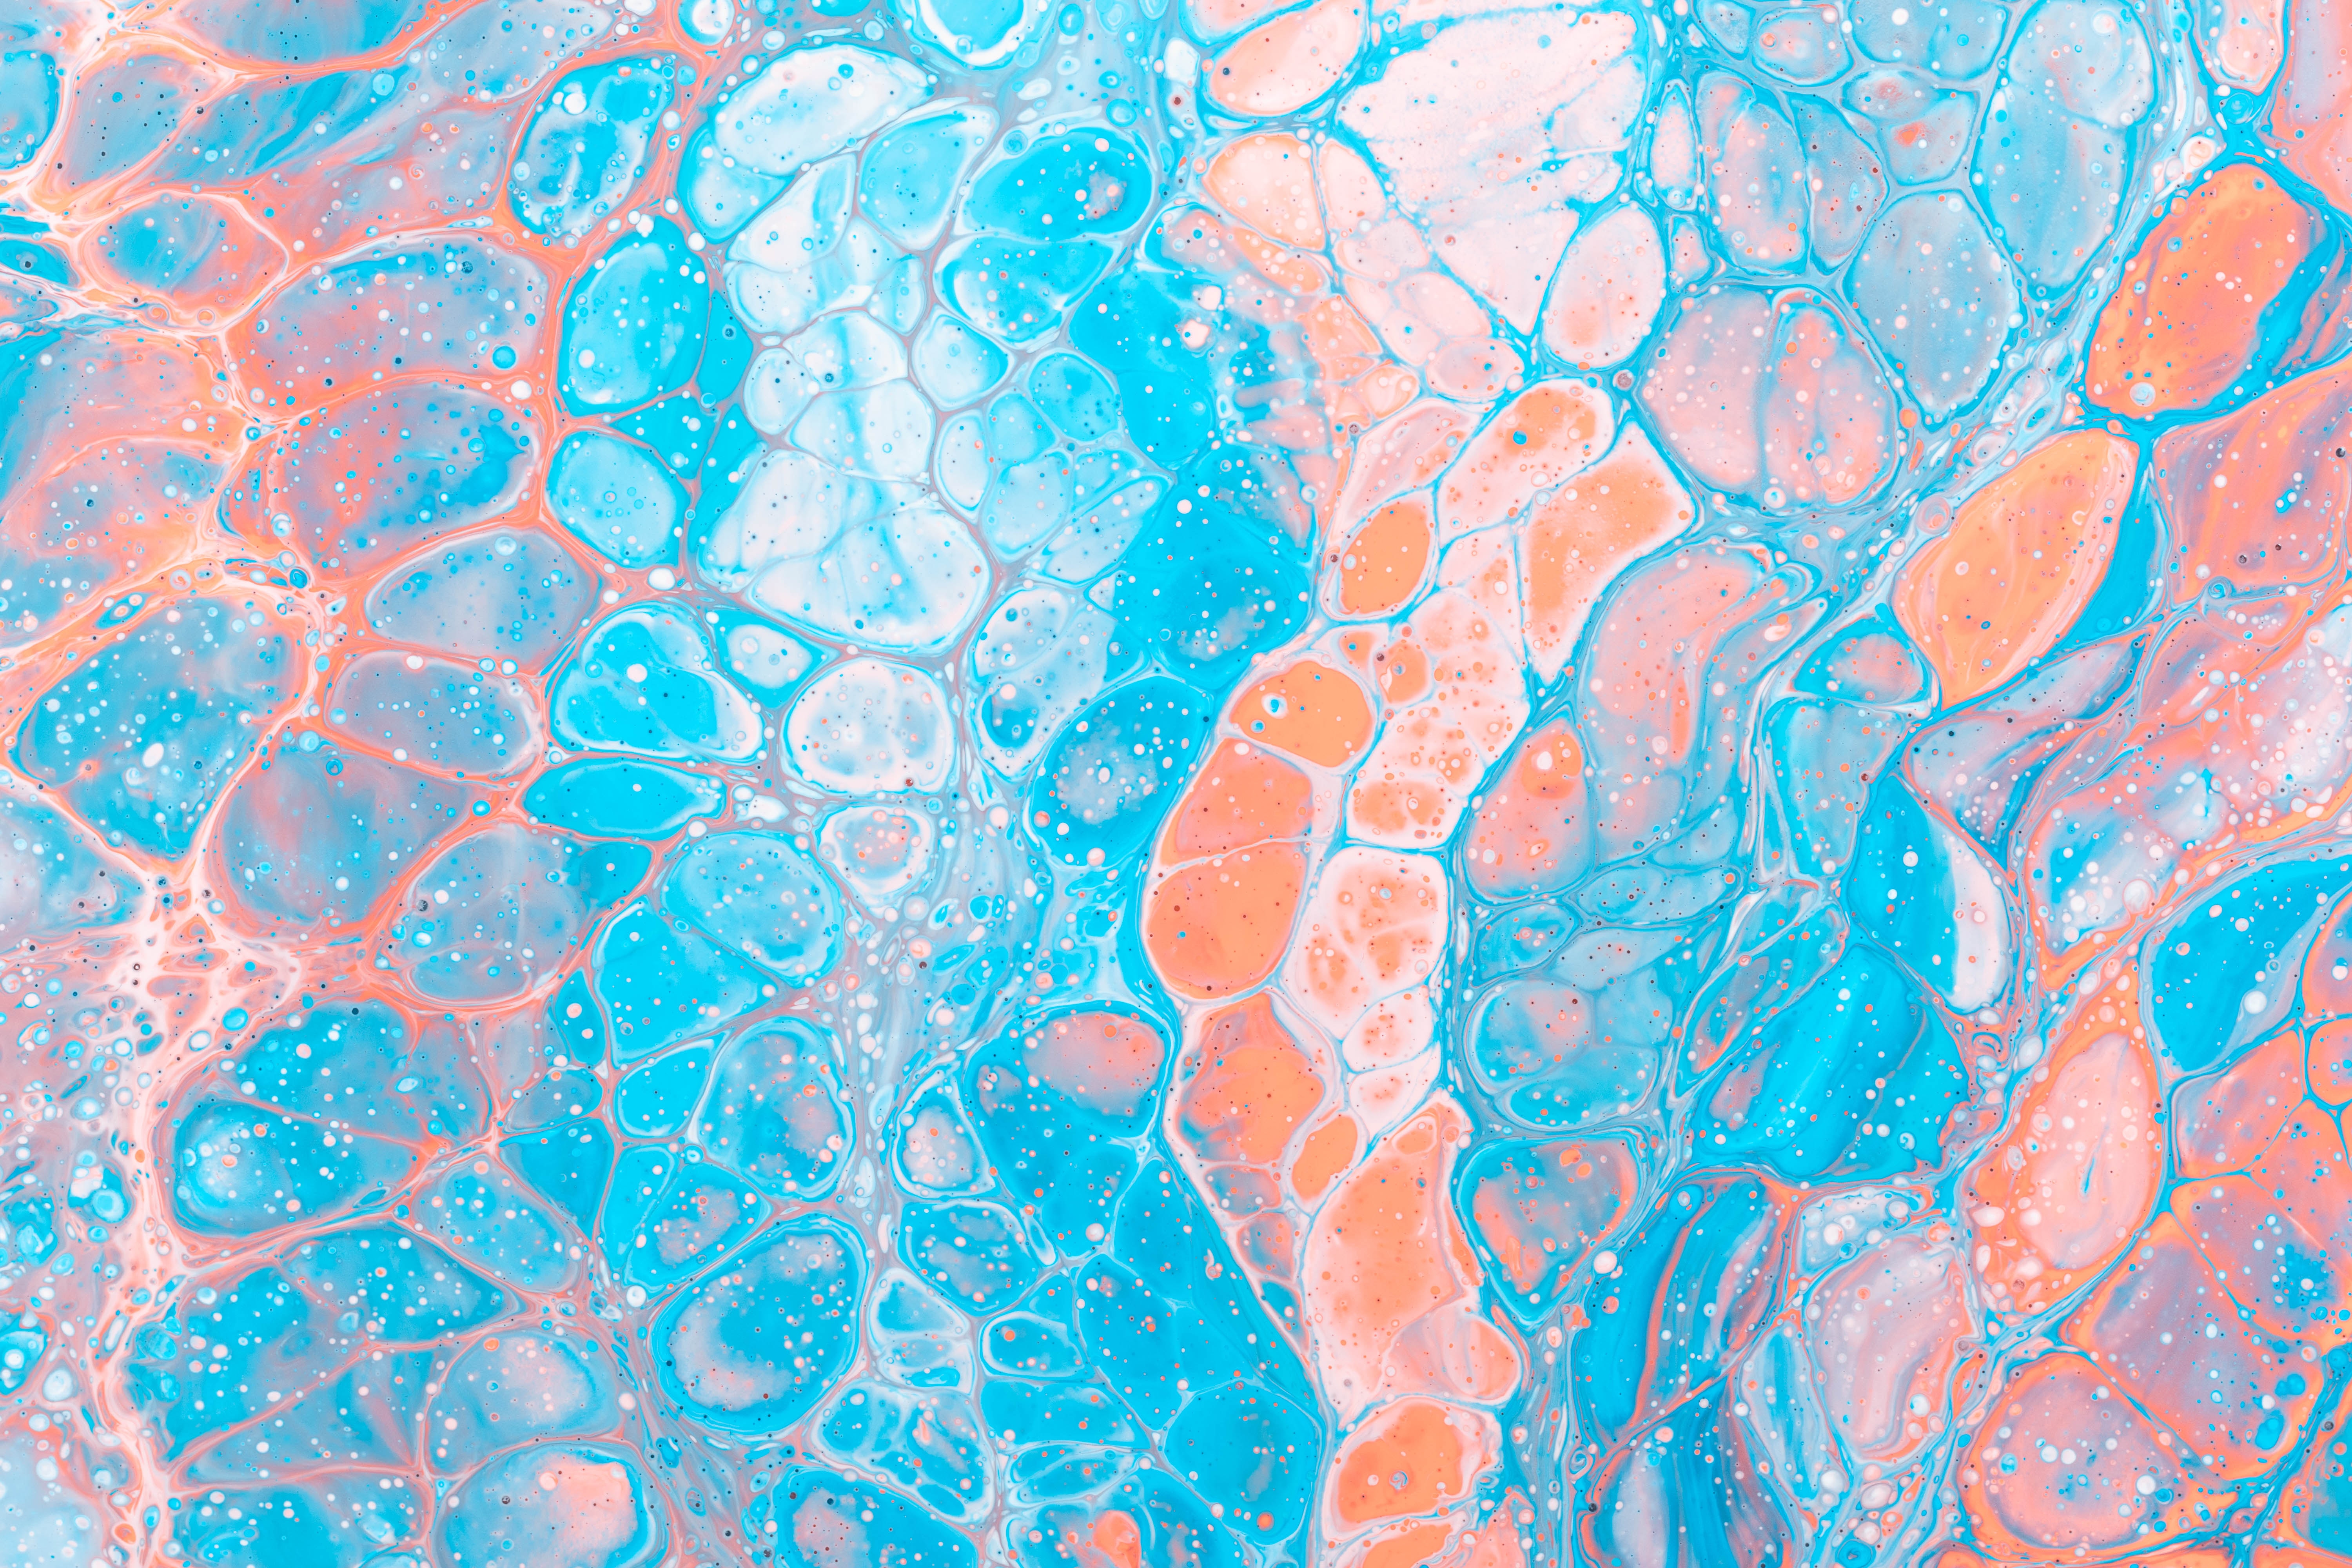 General 6000x4000 paint splatter paint splash abstract colorful orange blue white cyan digital art